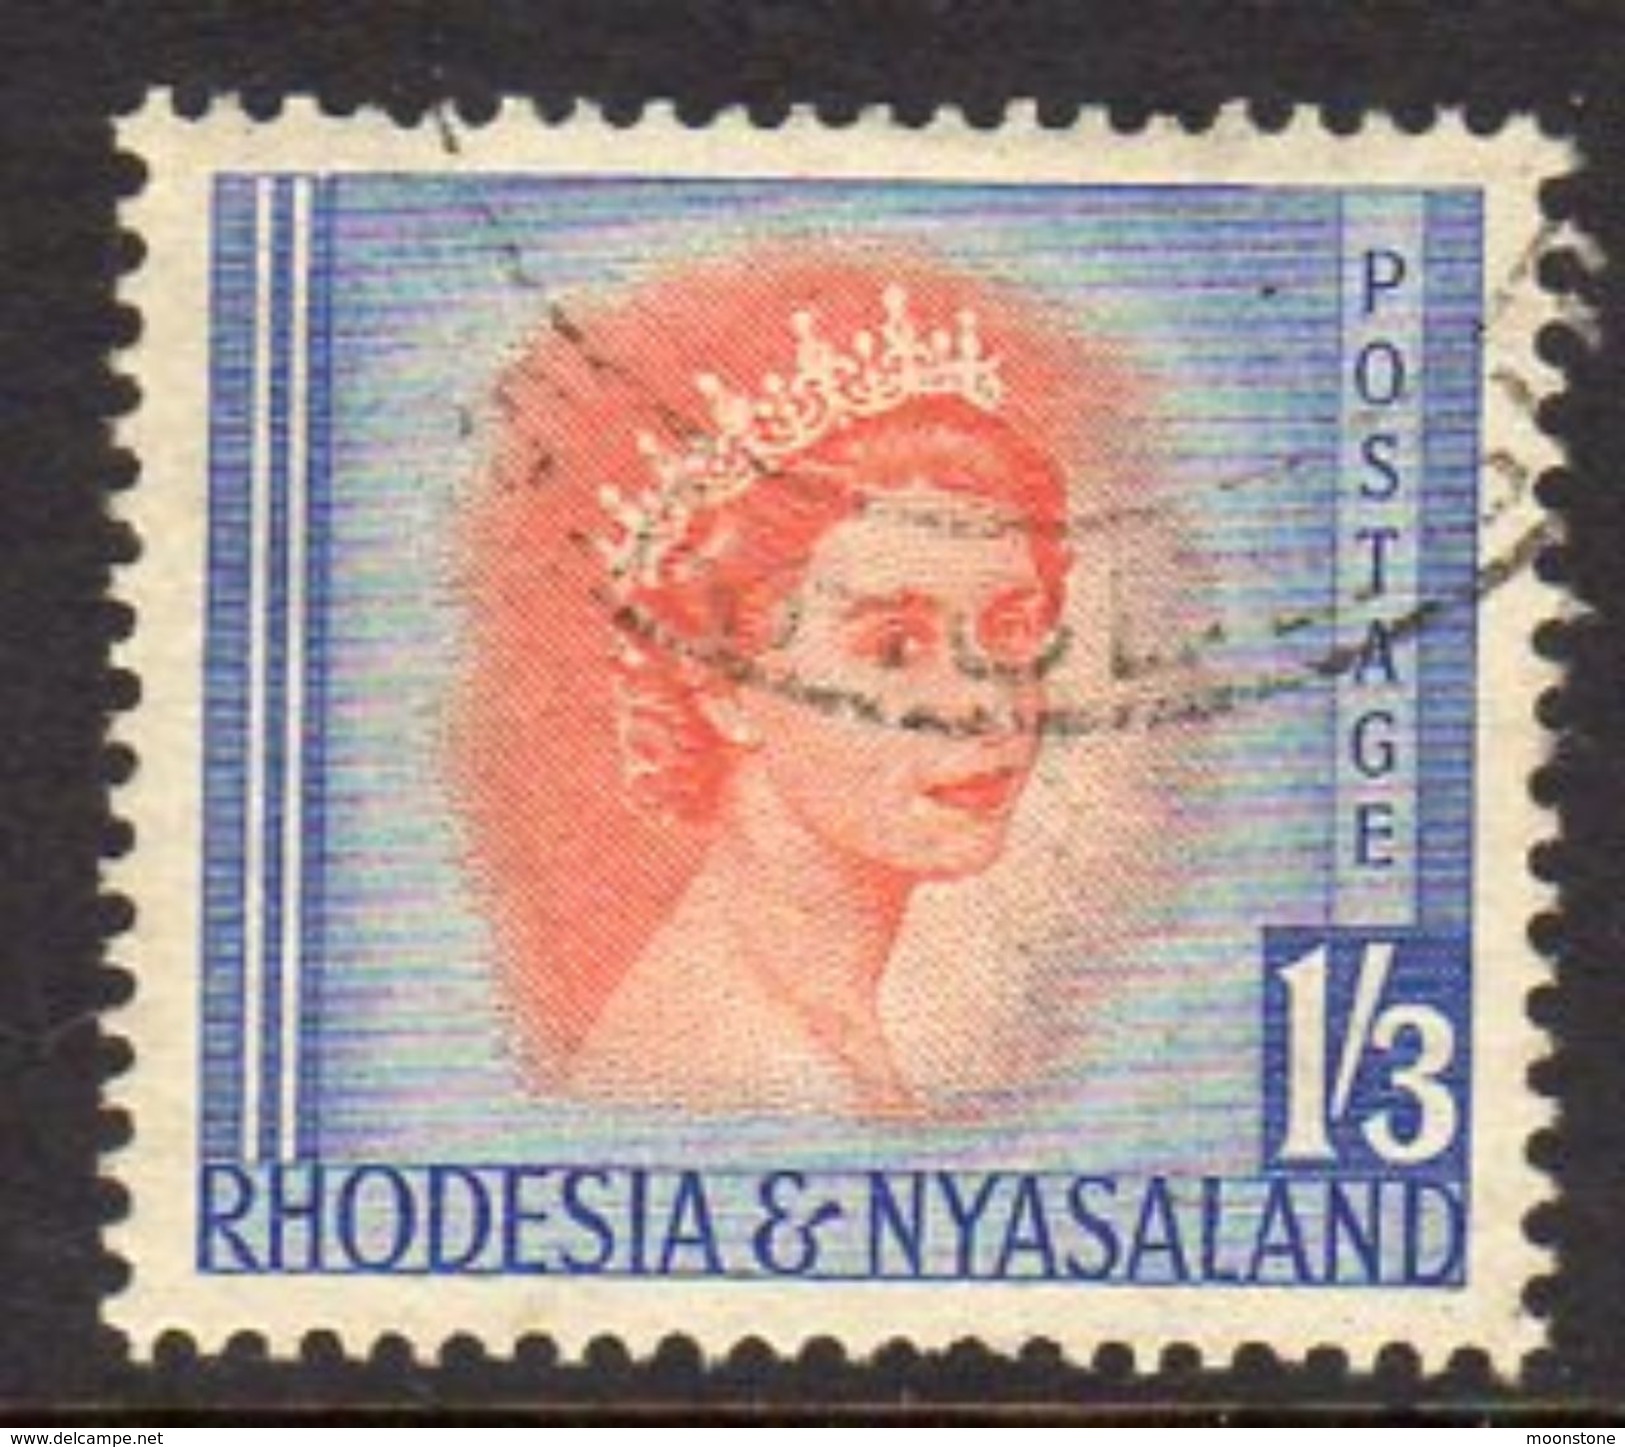 Rhodesia & Nyasaland 1954 1/3d Definitive, Used, SG 10 (BA) - Rhodésie & Nyasaland (1954-1963)